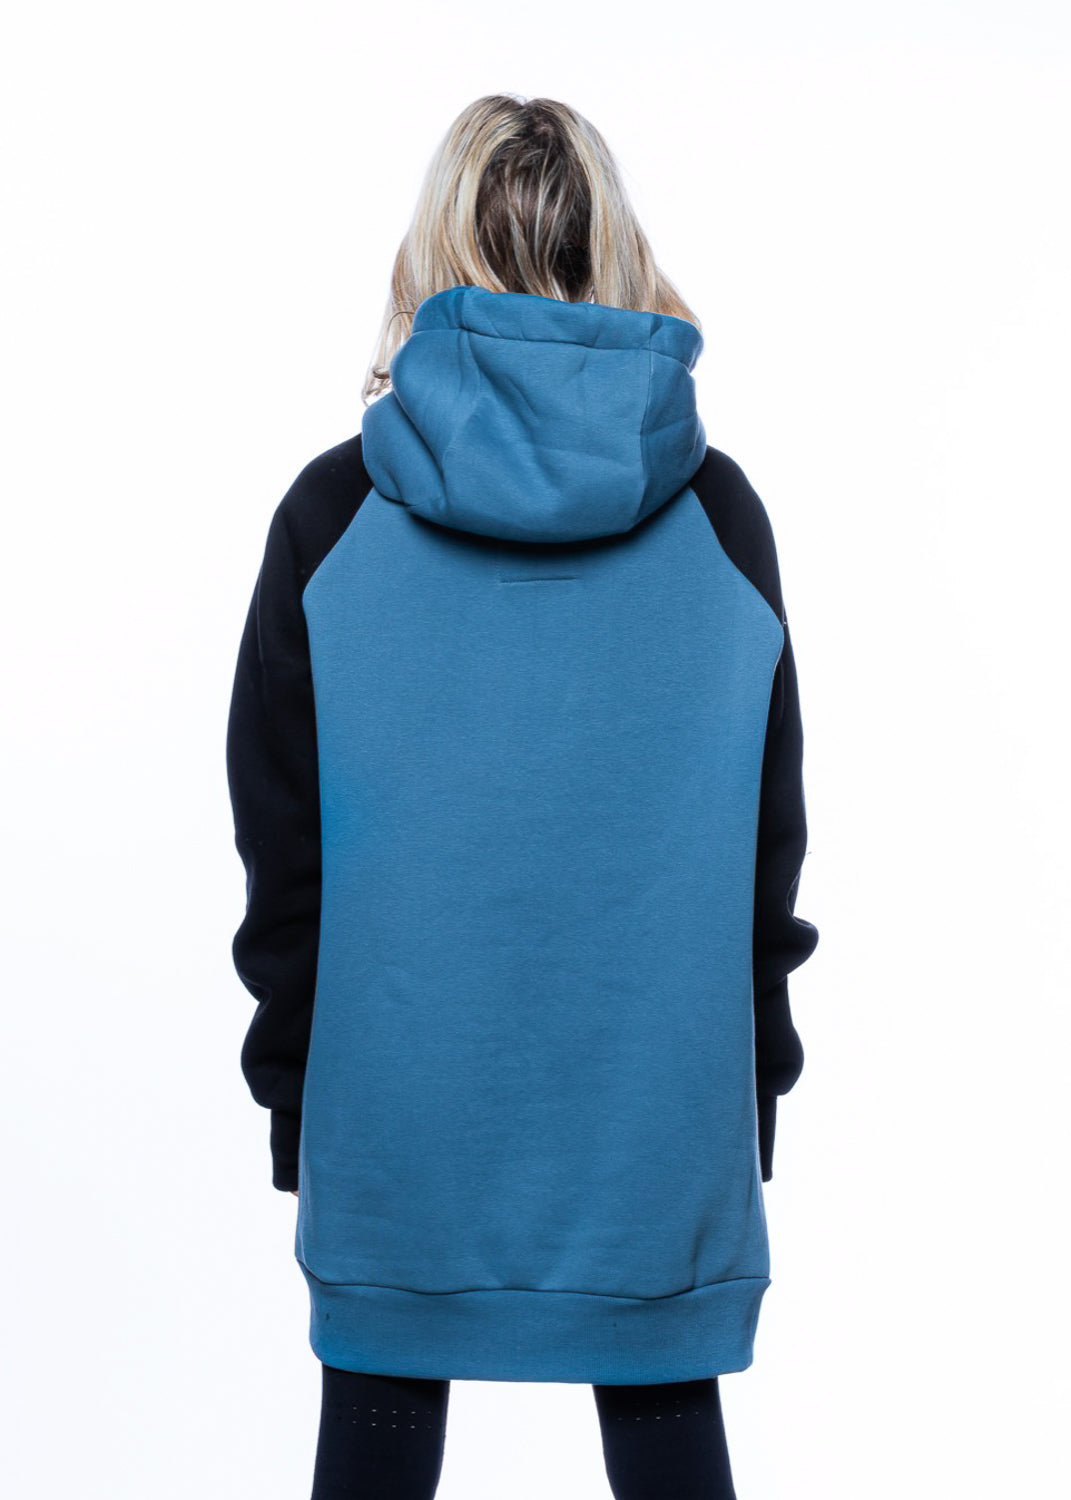 bro! park edition hoodie (slate blue-black)